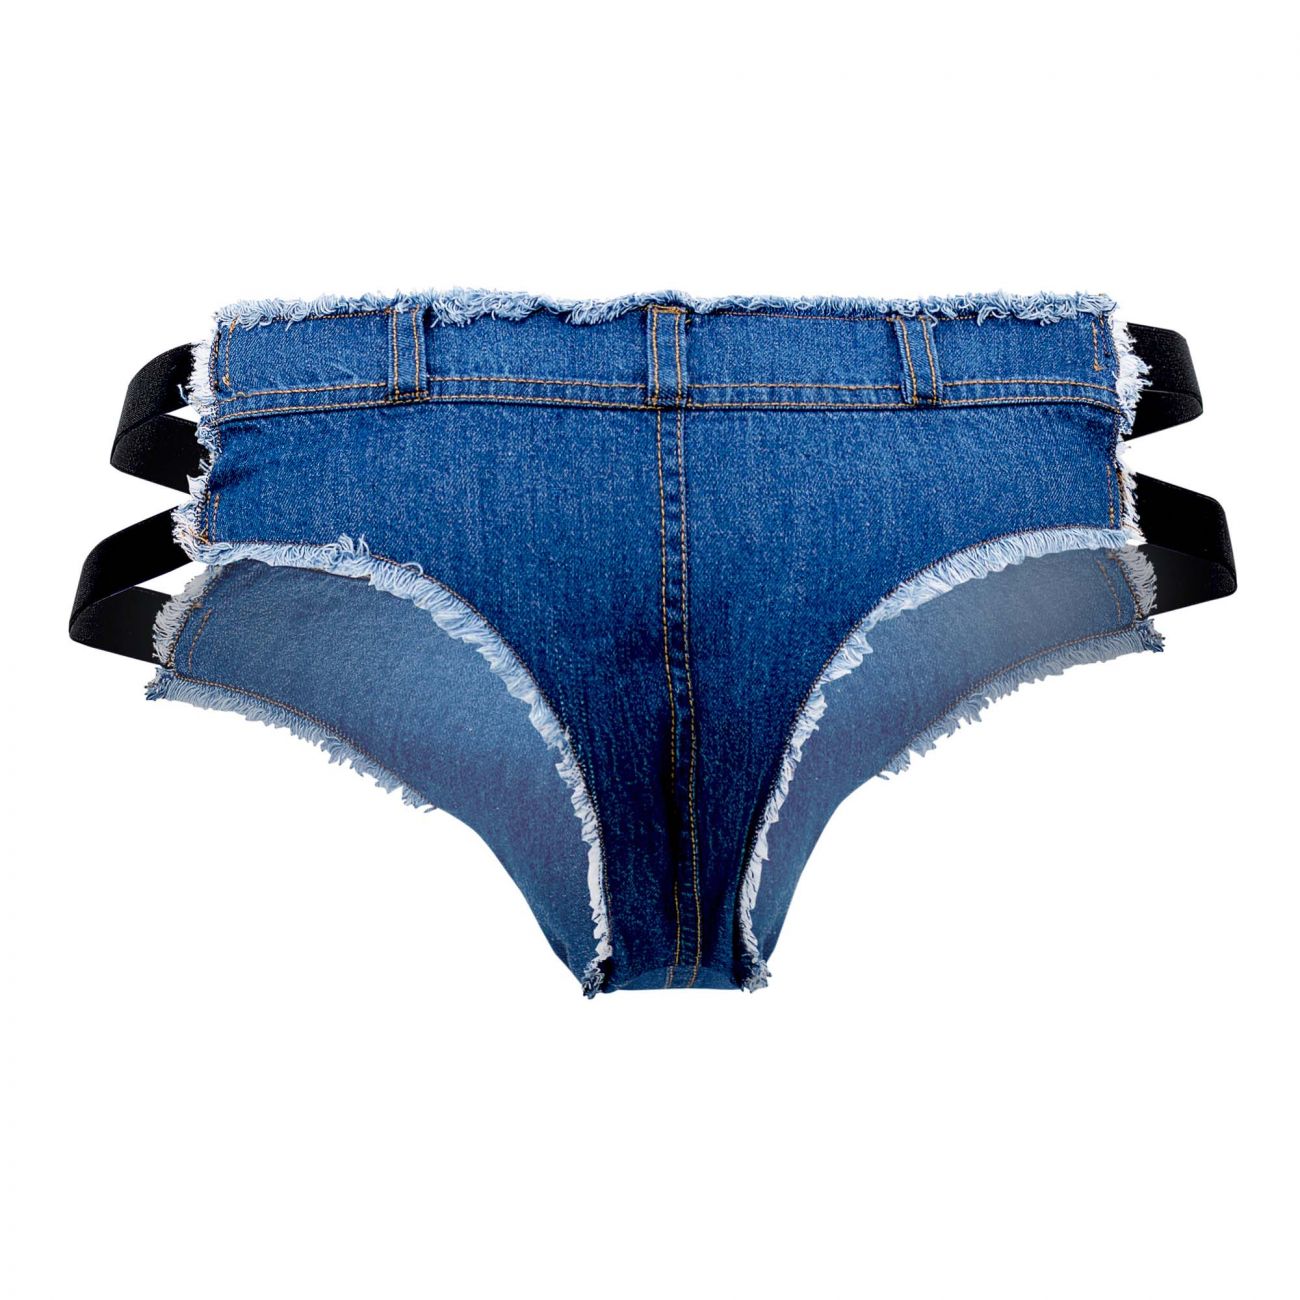 Mens Underwear: CandyMan 99452 American Jeans Thongs | eBay